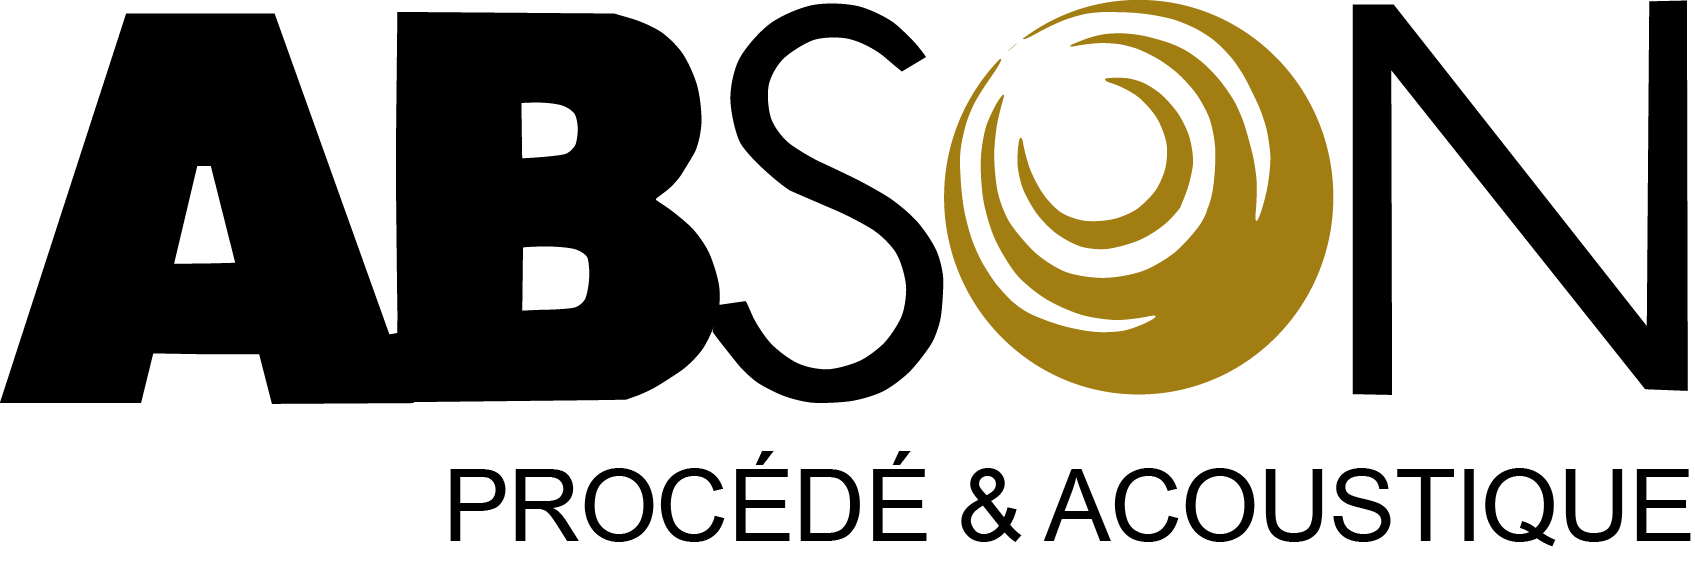 ABSON logo